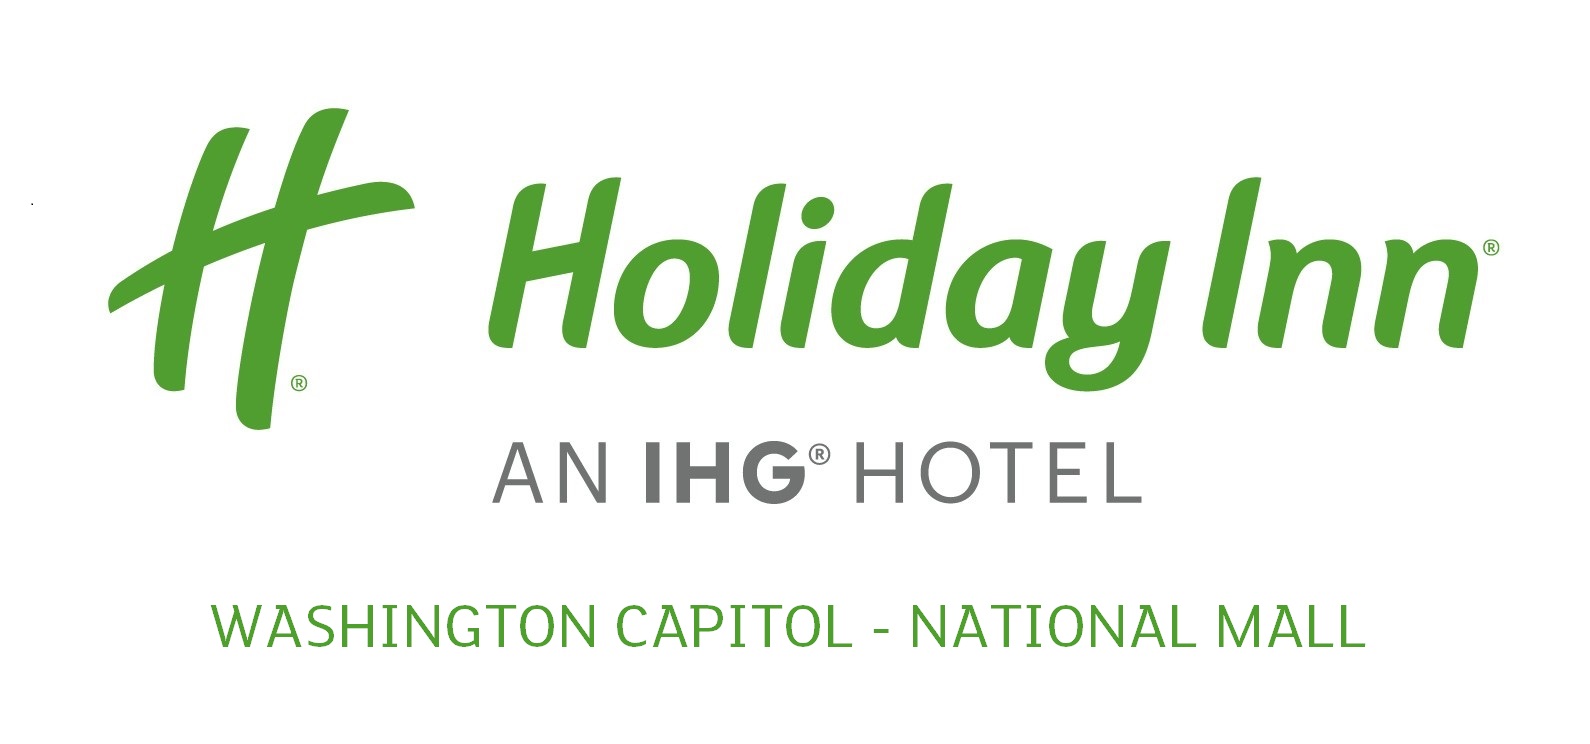 Holiday Inn hotel logo.